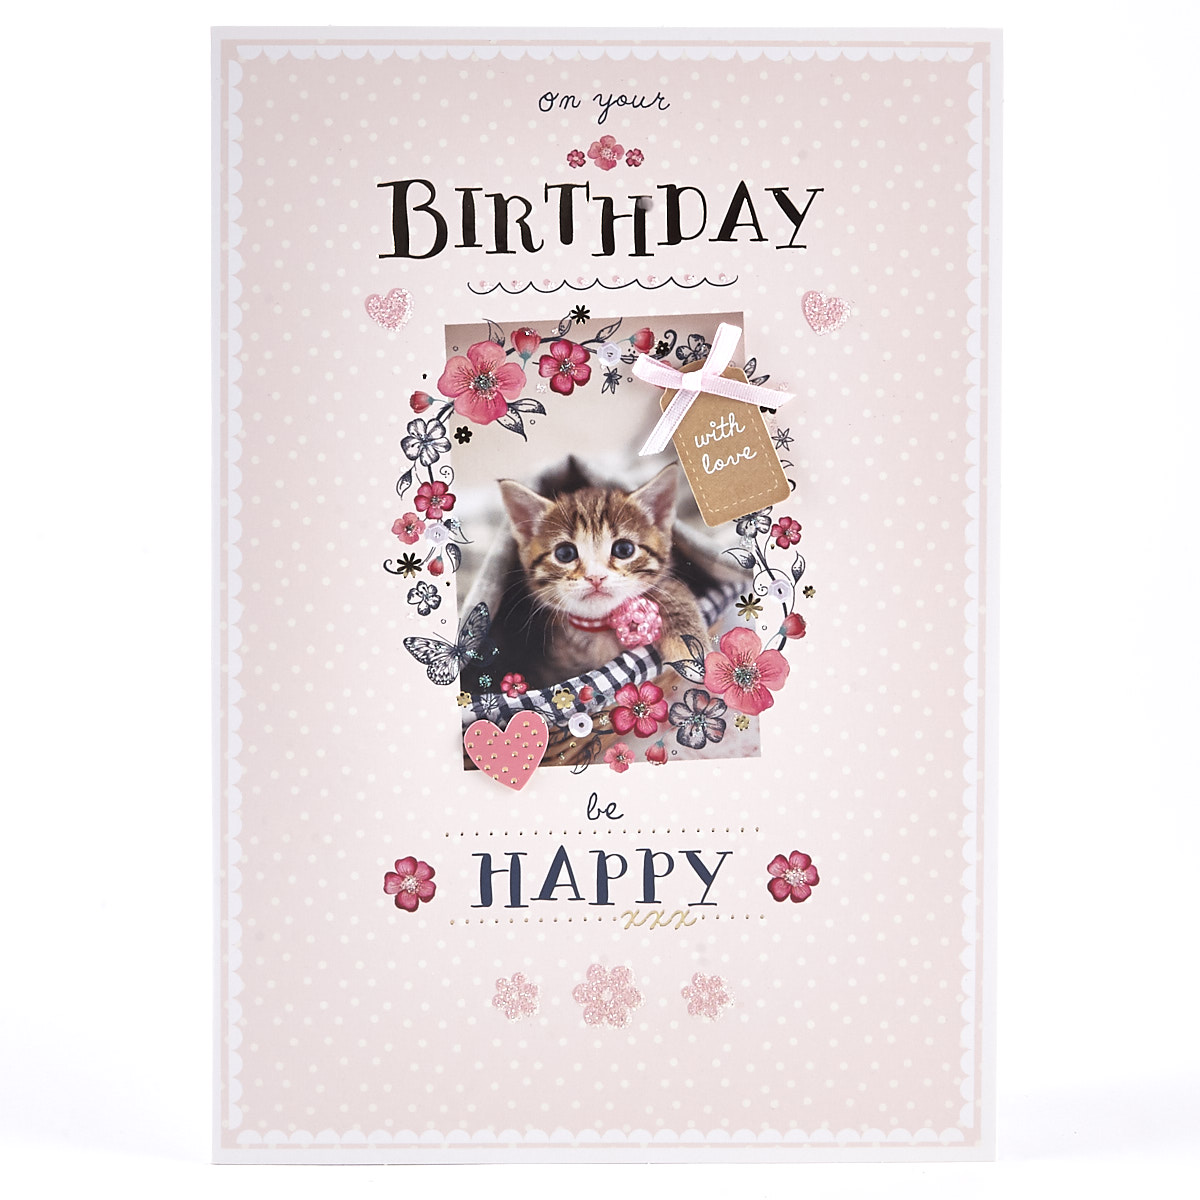 Birthday Card - Kitten In Basket